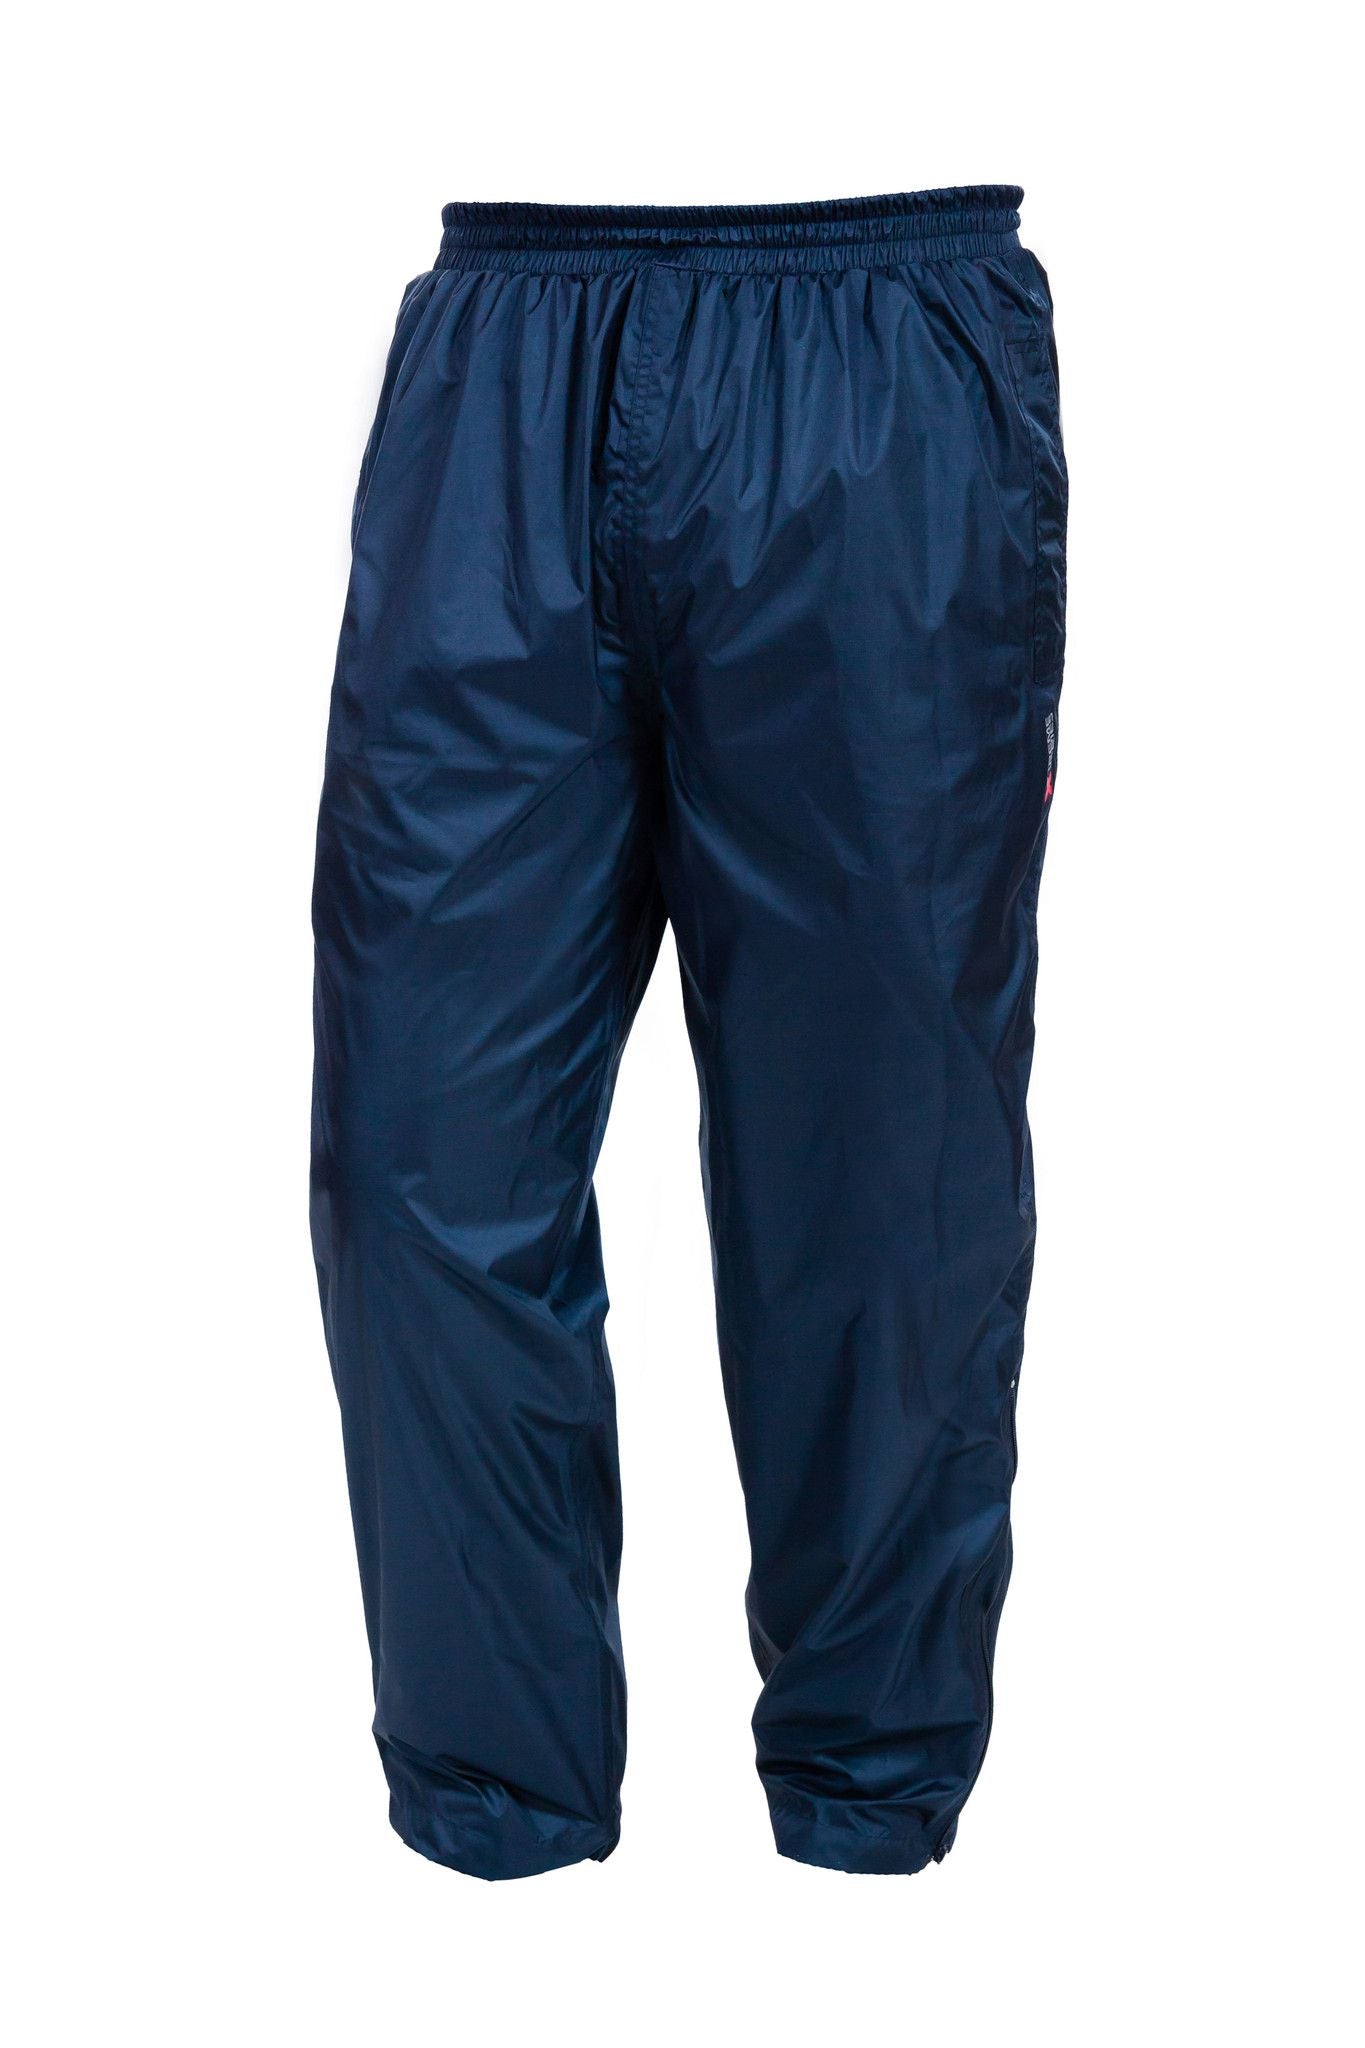 Horizon Unisex Waterproof Ripstop Overtrousers - Short Leg - Target Dry